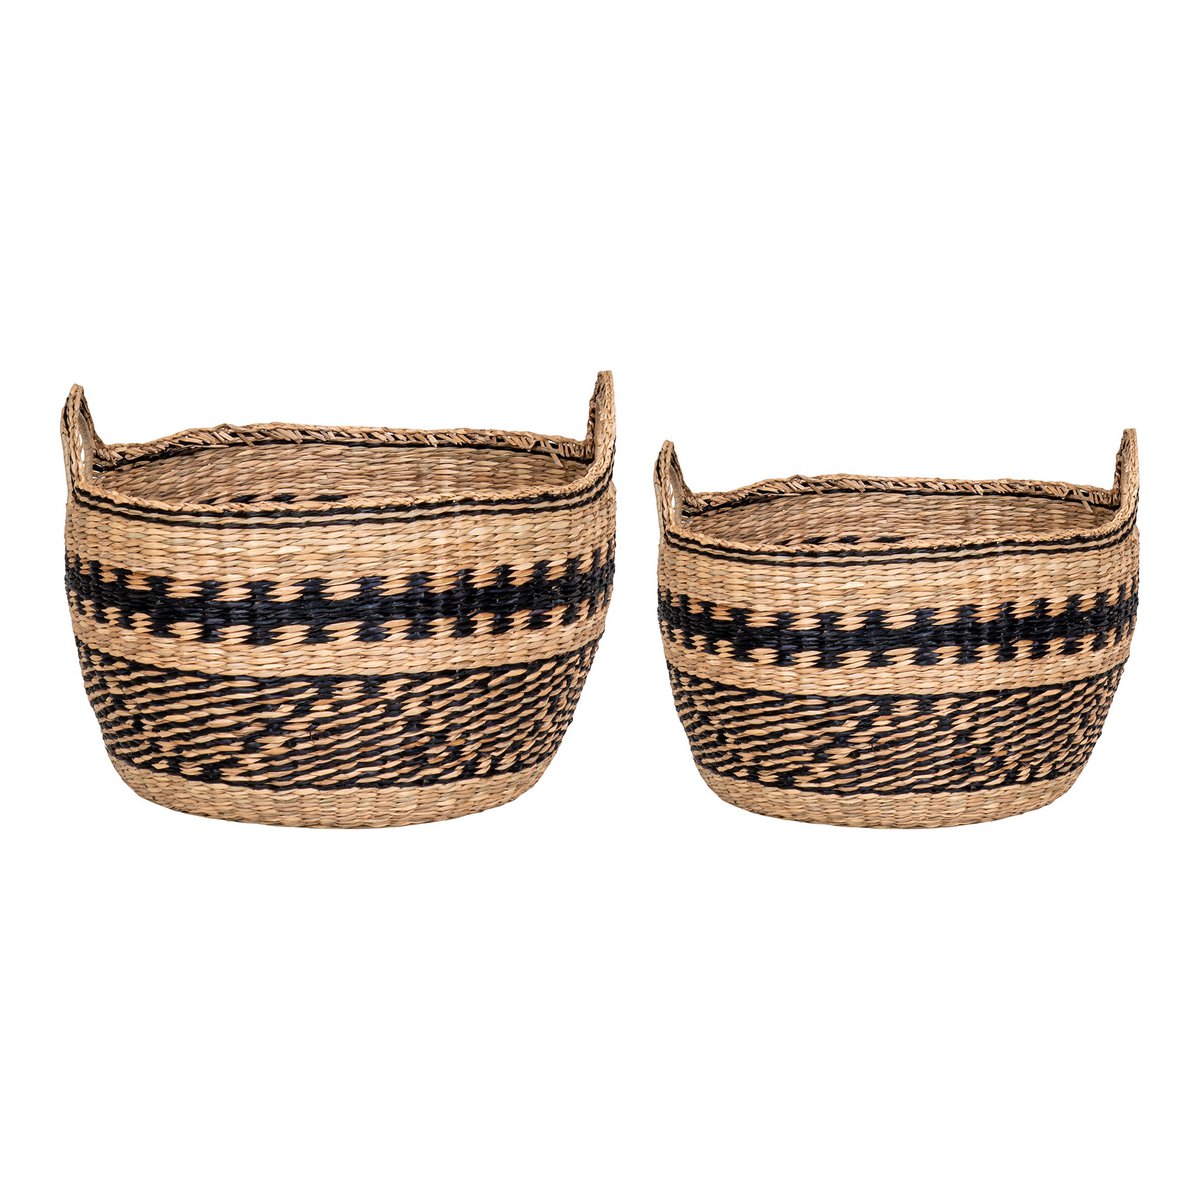 Teba baskets - set of 2